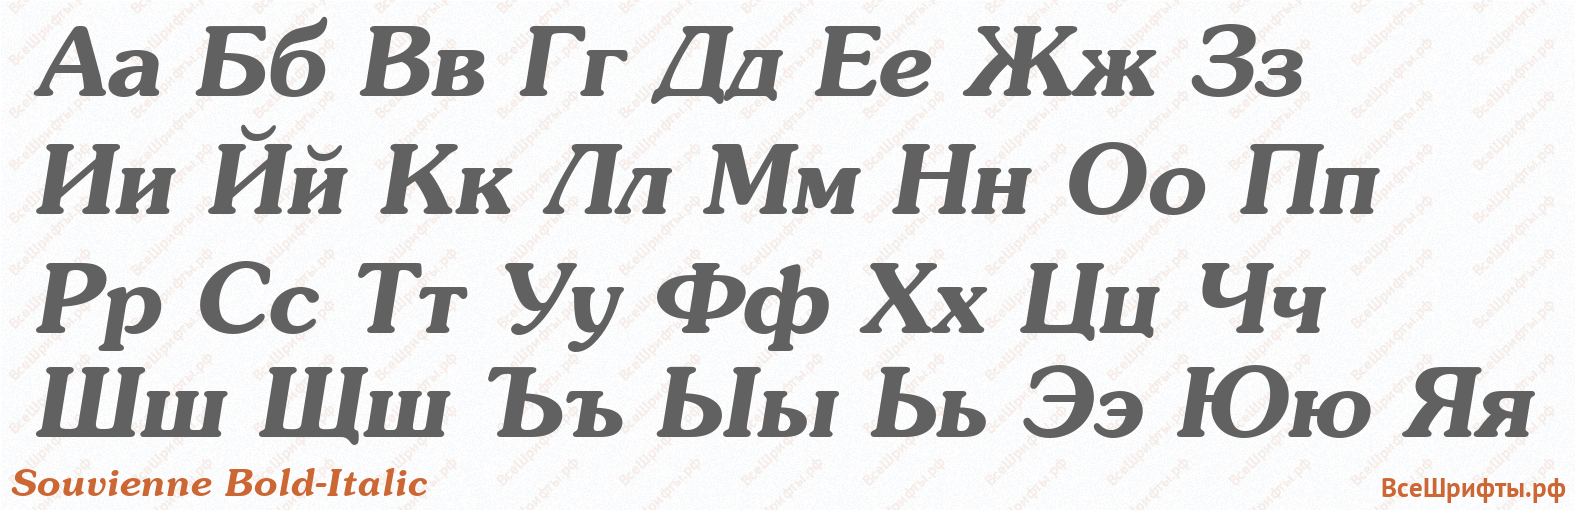 Шрифт Souvienne Bold-Italic с русскими буквами